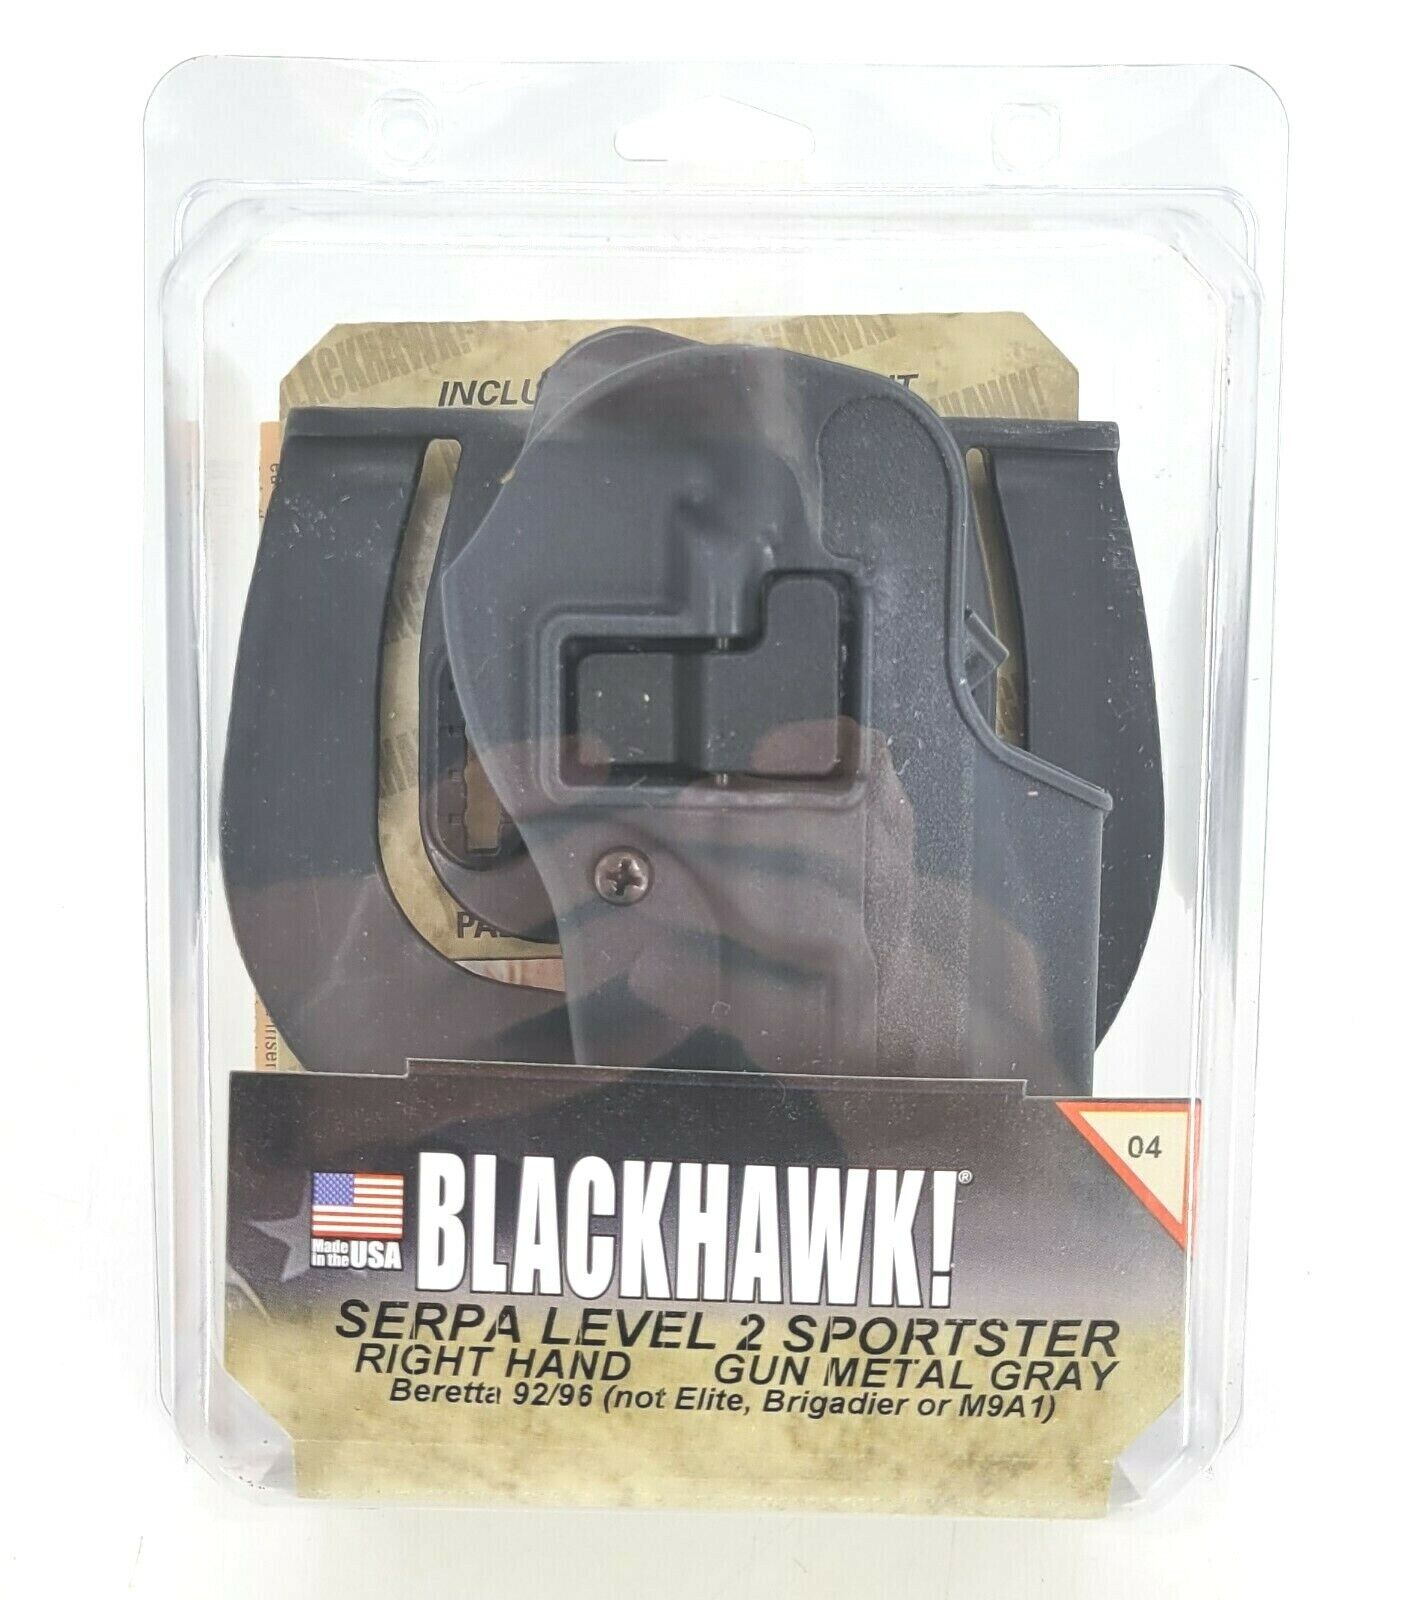 BlackHawk SERPA Level 2 Sportster Holster Gun Metal Gray Beretta 92/96 RH 